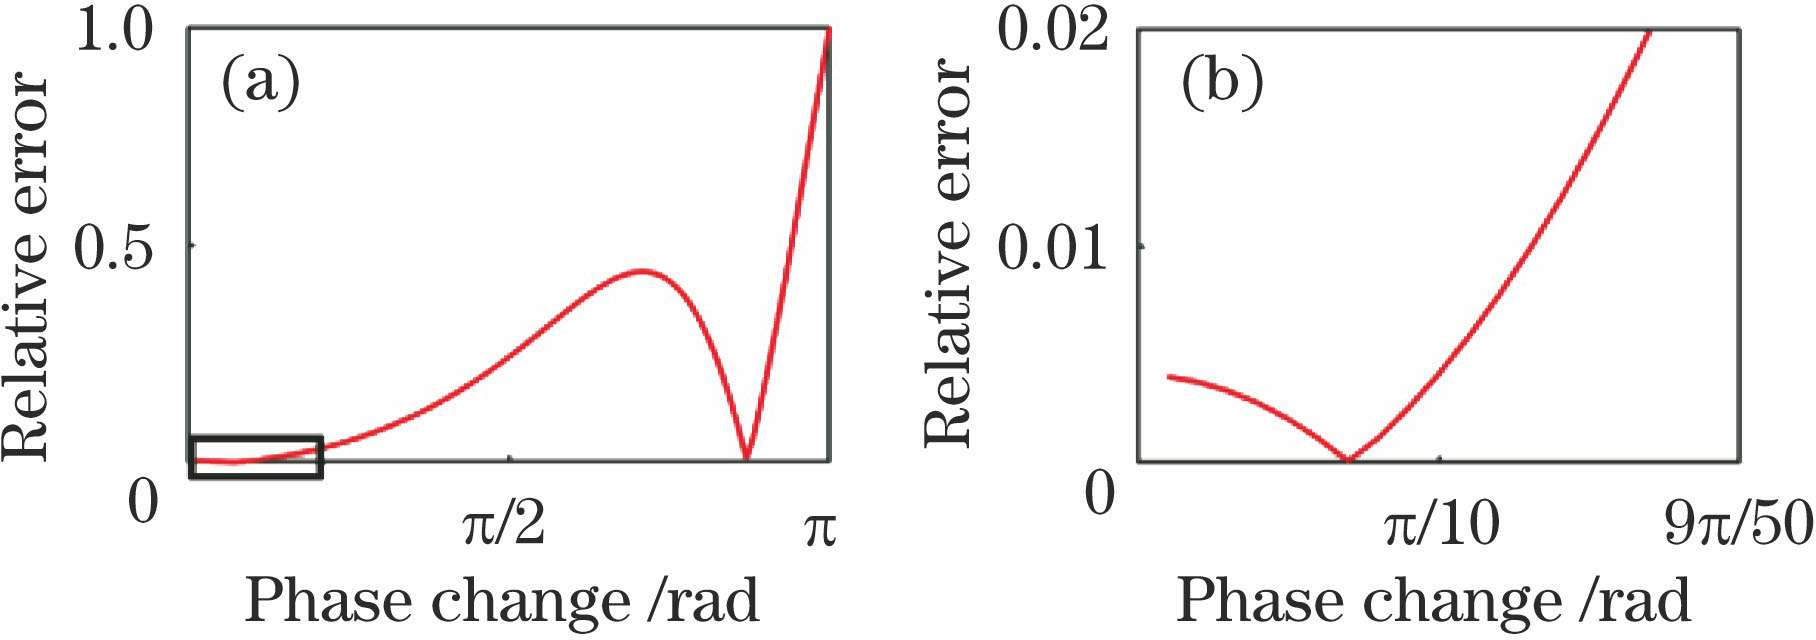 Relative error distribution of H-S algorithm. (a) Range of phase shift is (0, π]; (b) range of phase shift is (0, 9π/50] (relative error is <2%)